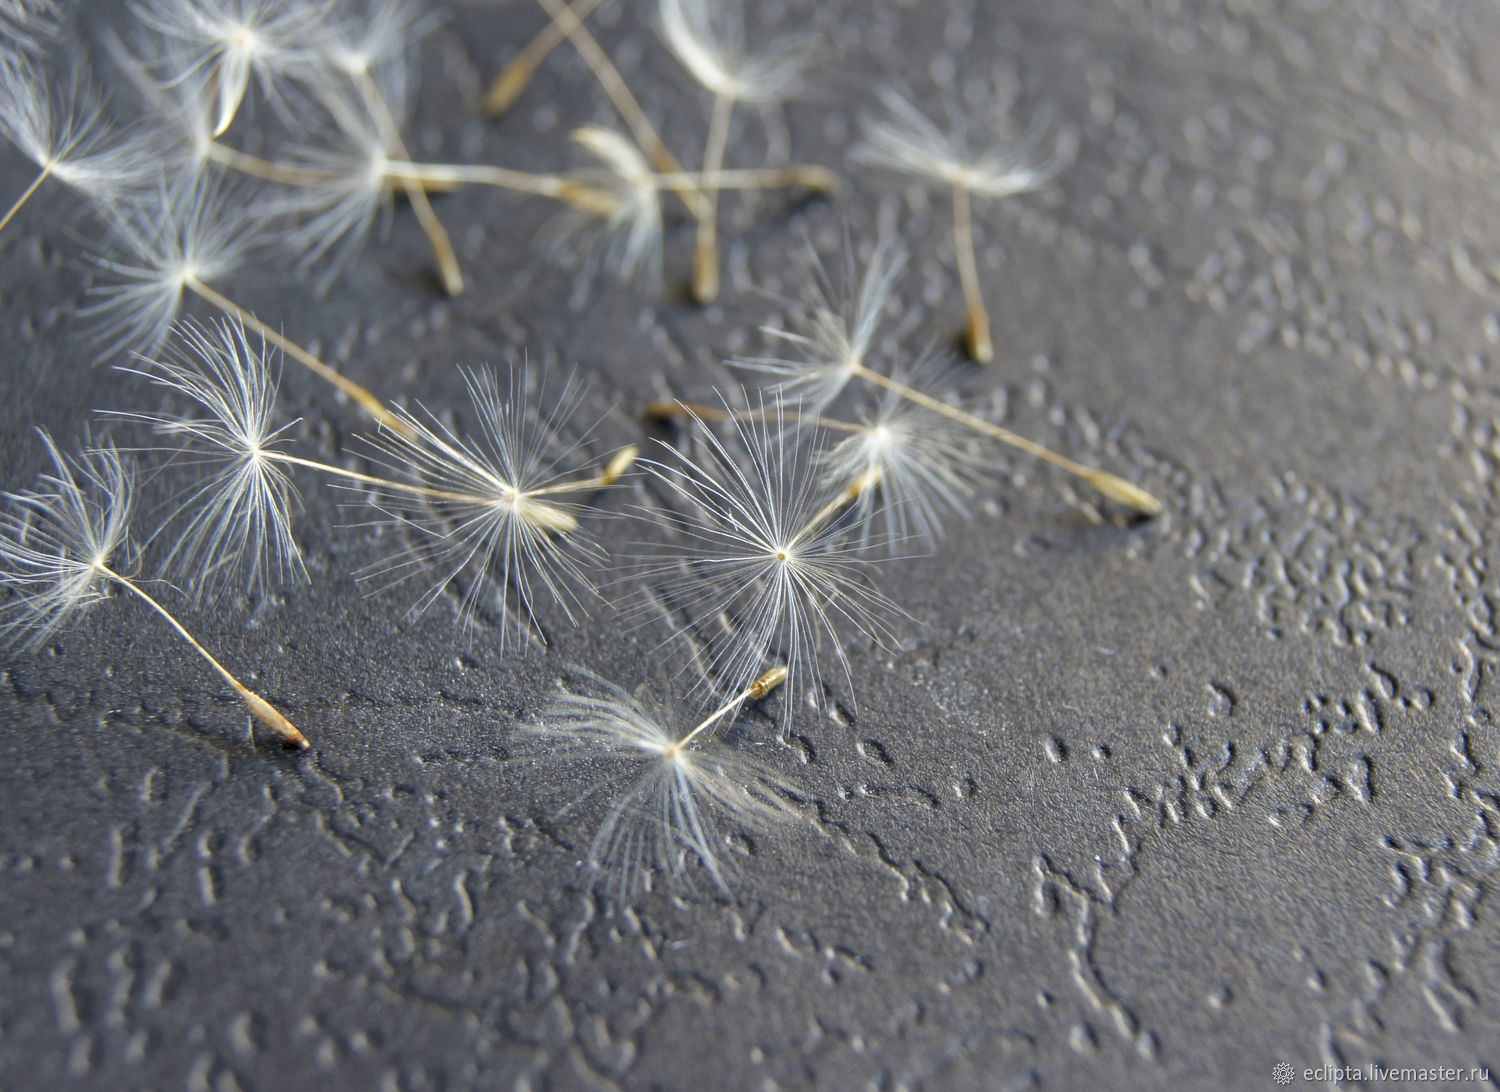 Семена на парашютиках платонов семен кратко